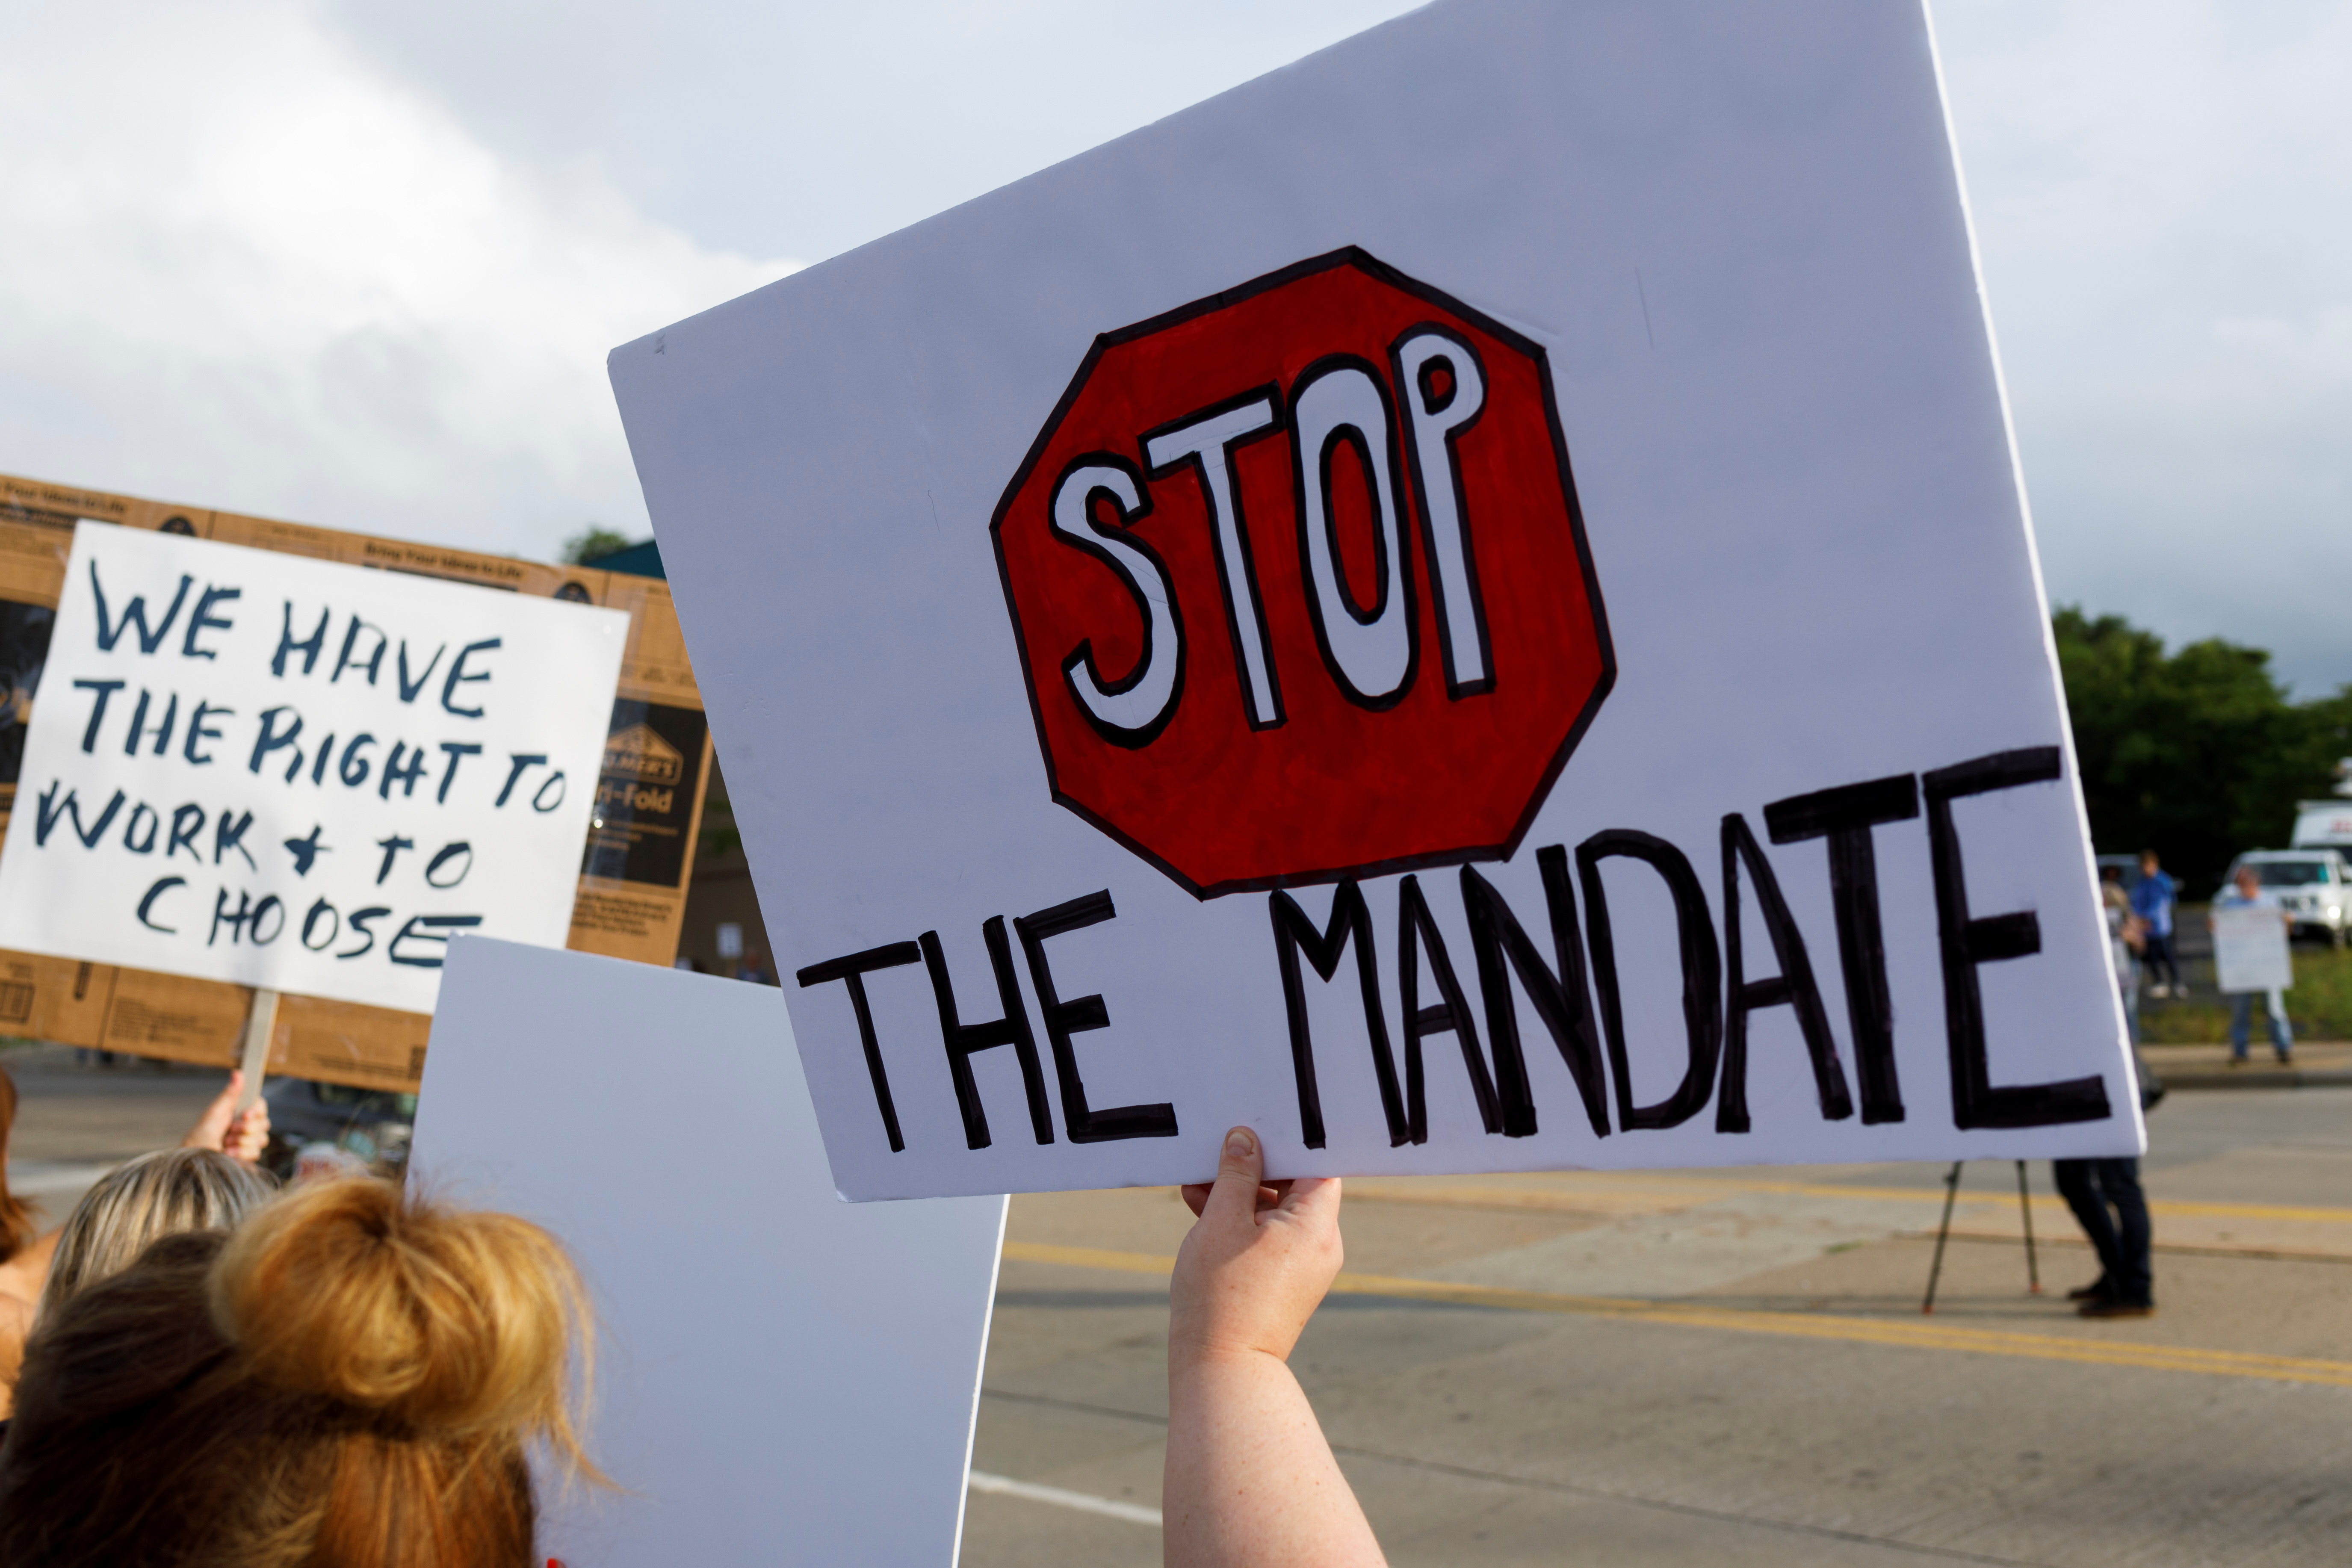 People protest vaccine mandates at Summa Health Hospital in Ohio